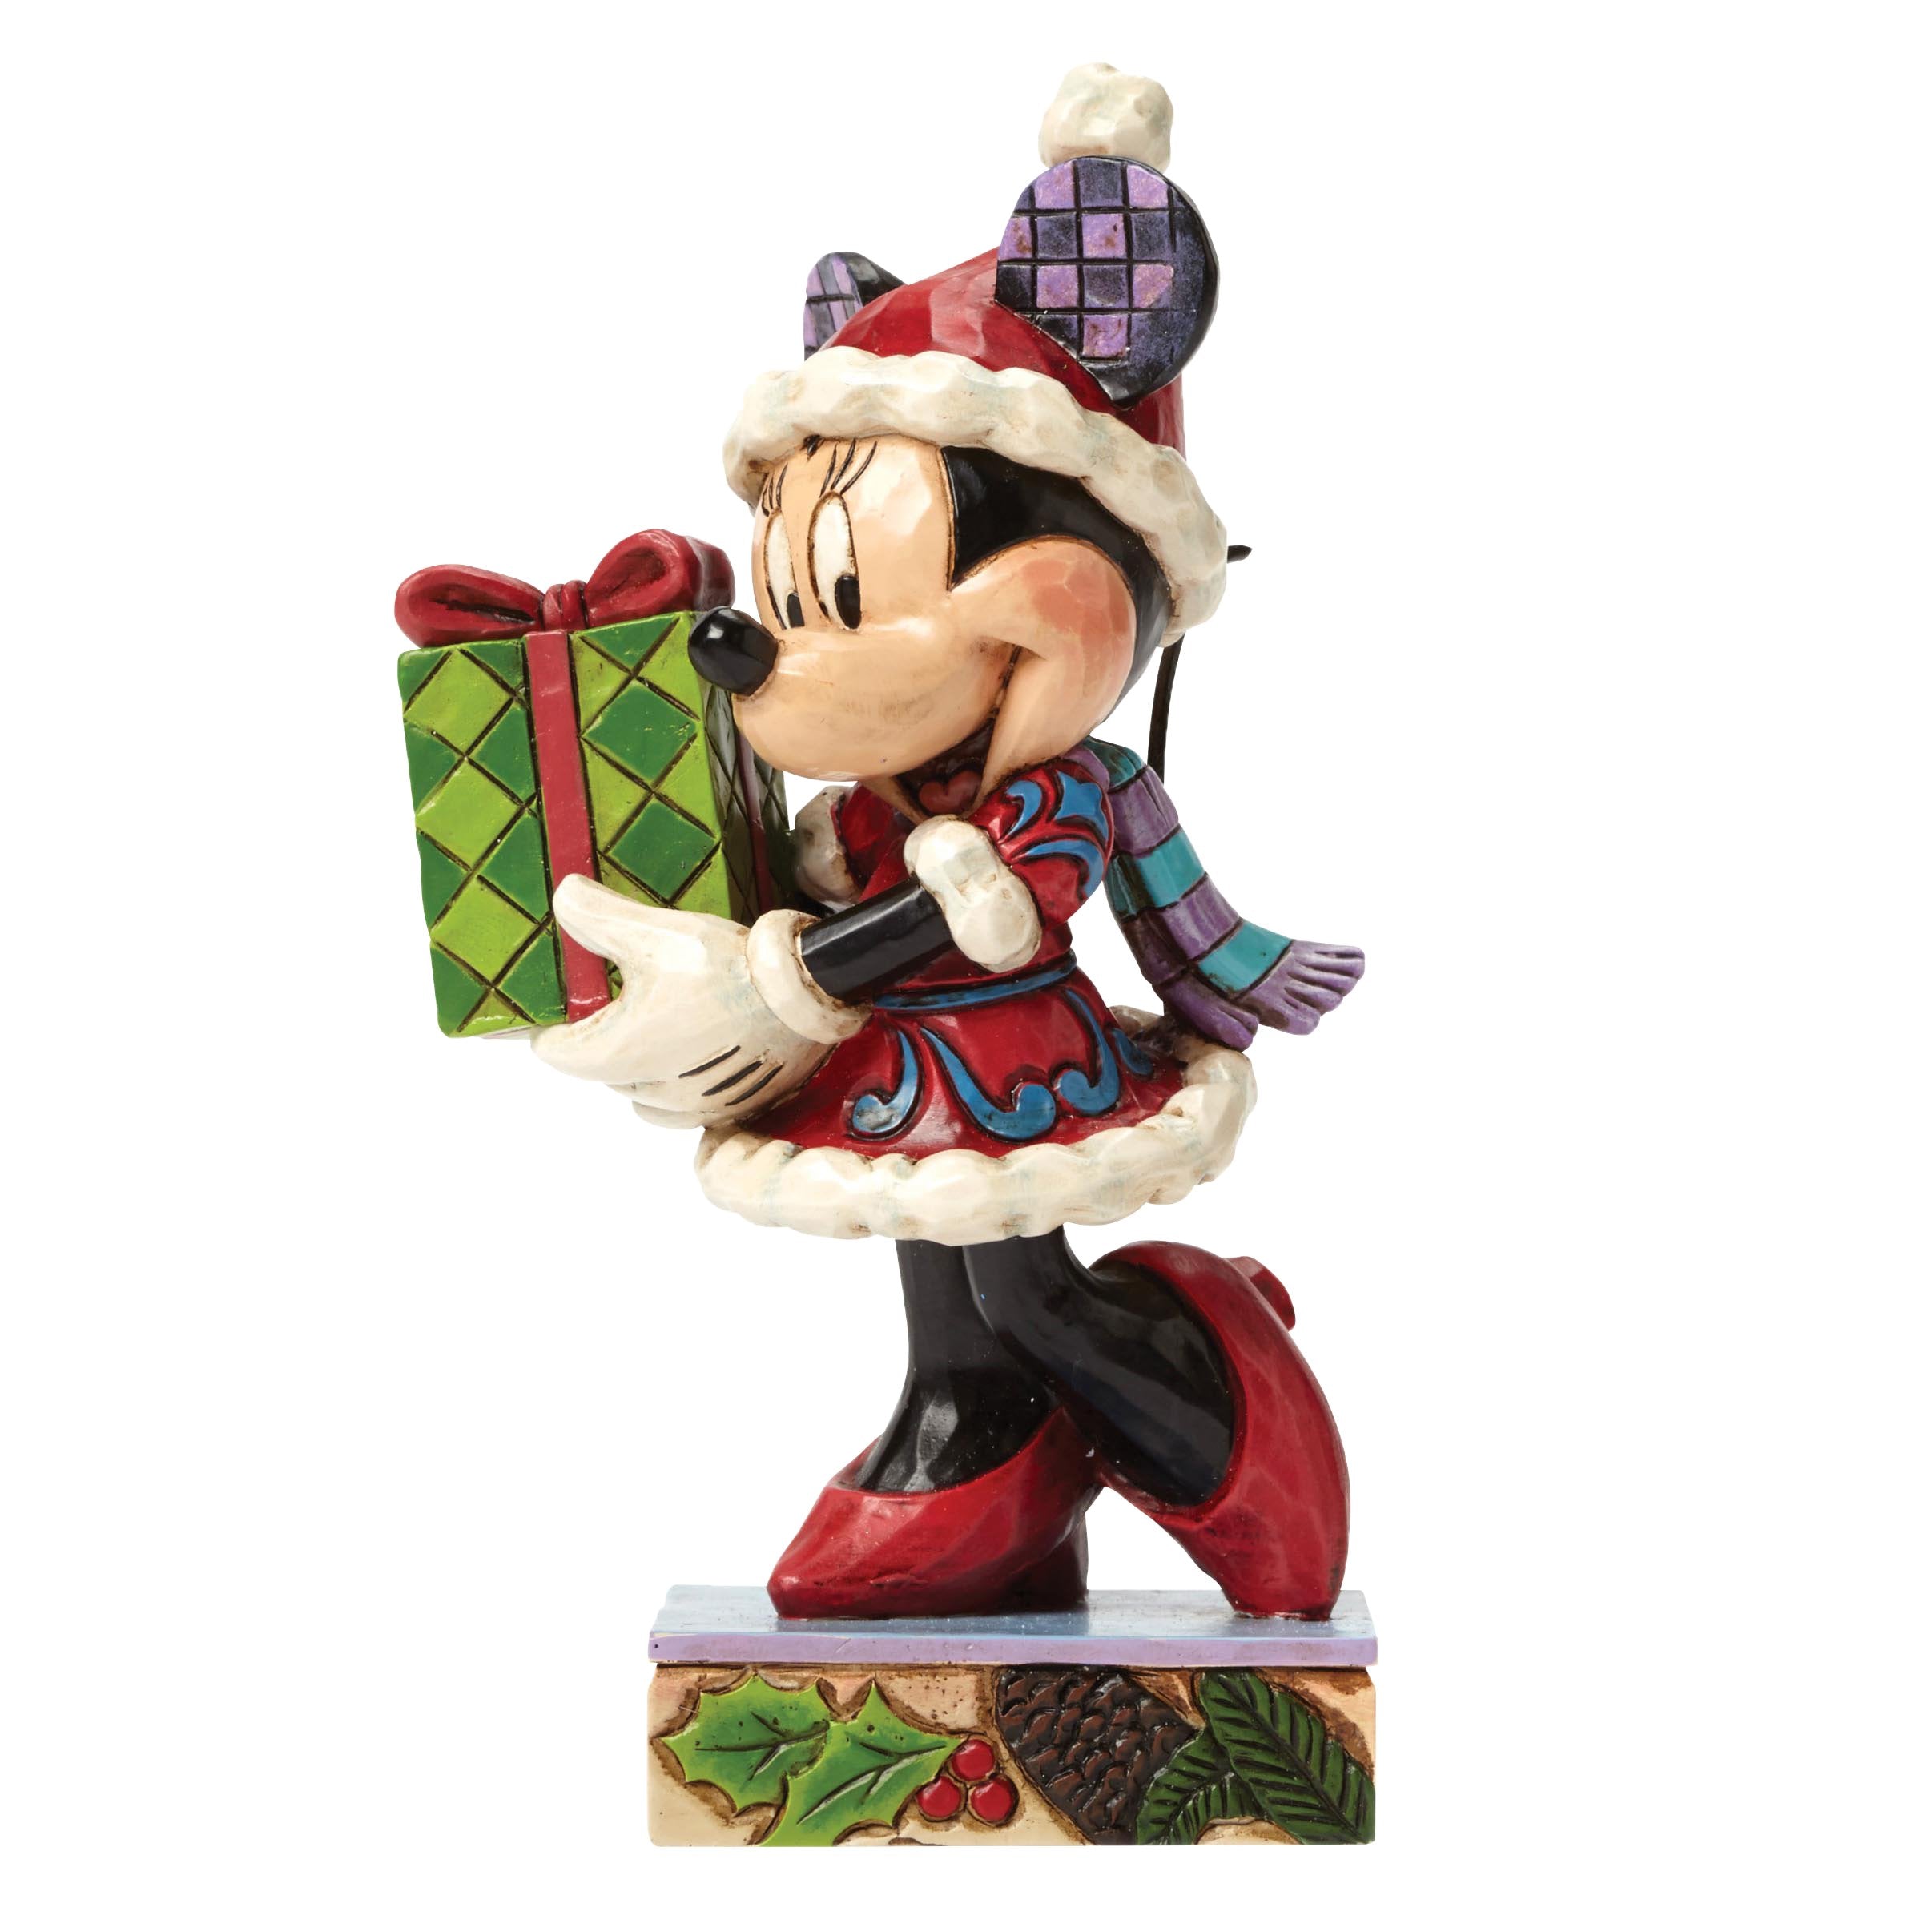 Jim Shore for Enesco Disney Traditions by Christmas Minnie Figurine, 4.5"